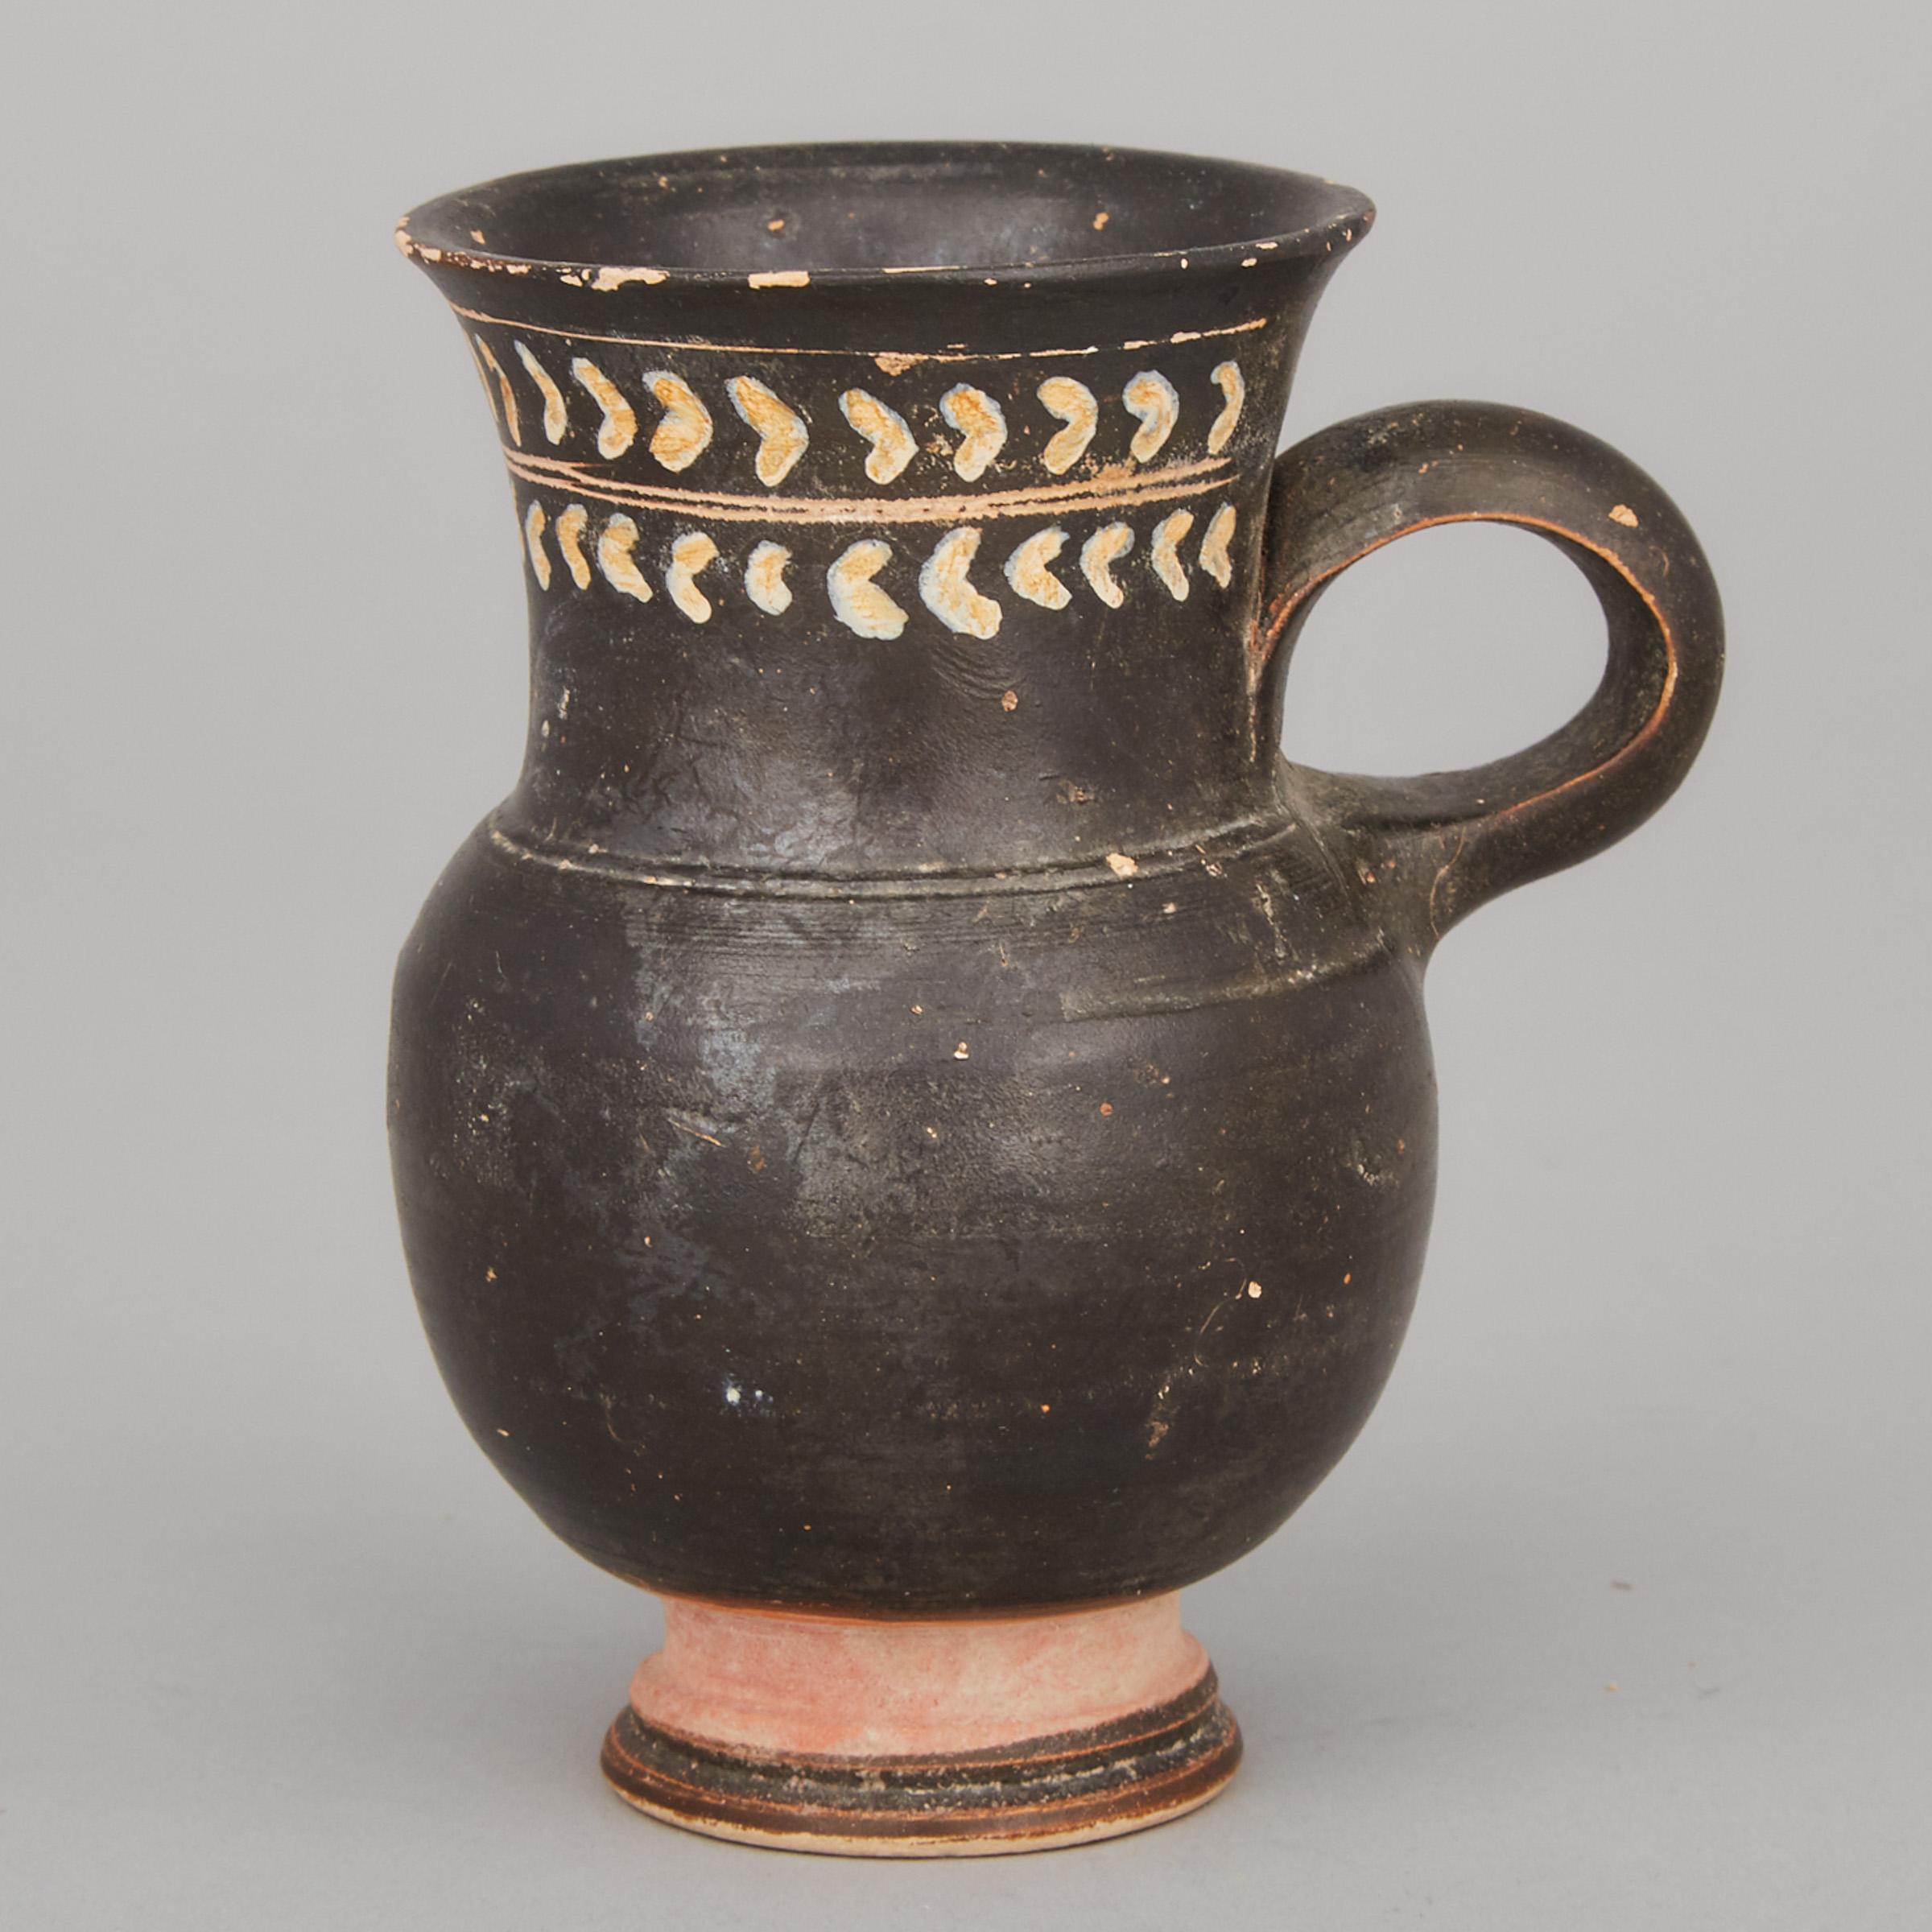 Campanian Black Ware Olpe, 4th-3rd century B.C.